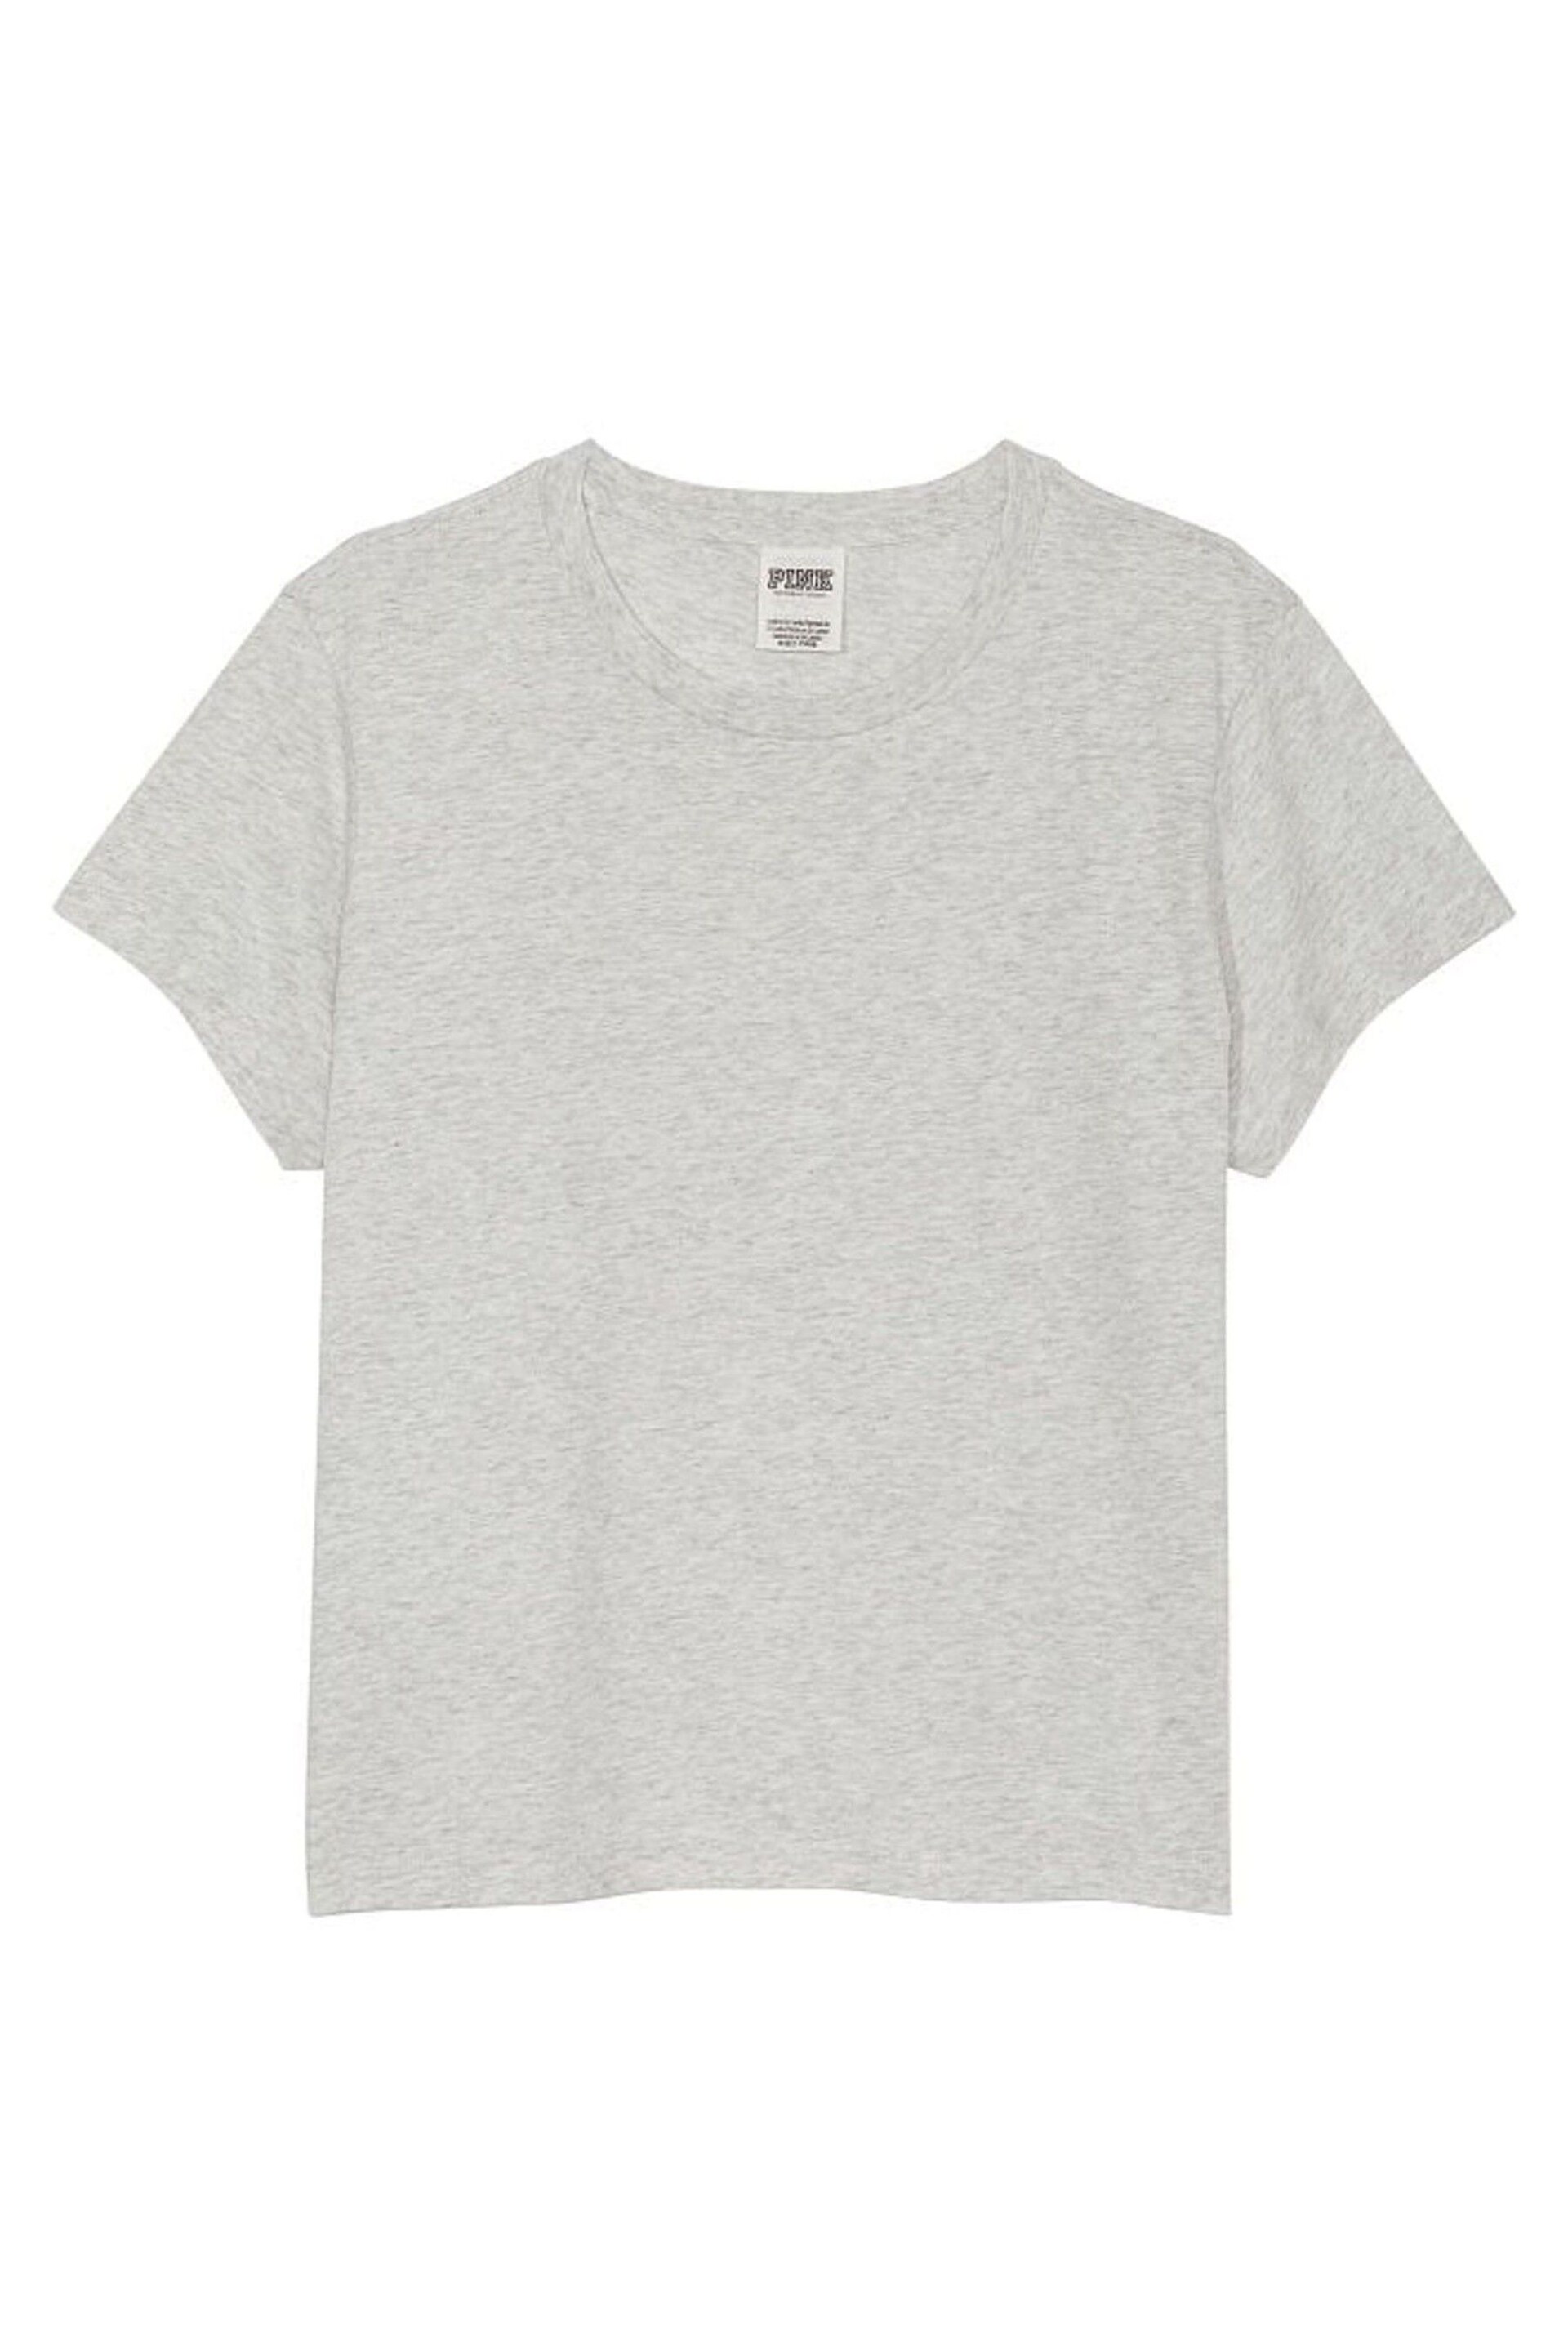 Victoria's Secret PINK Heather Grey Short Sleeve Dreamer T-Shirt - Image 4 of 4